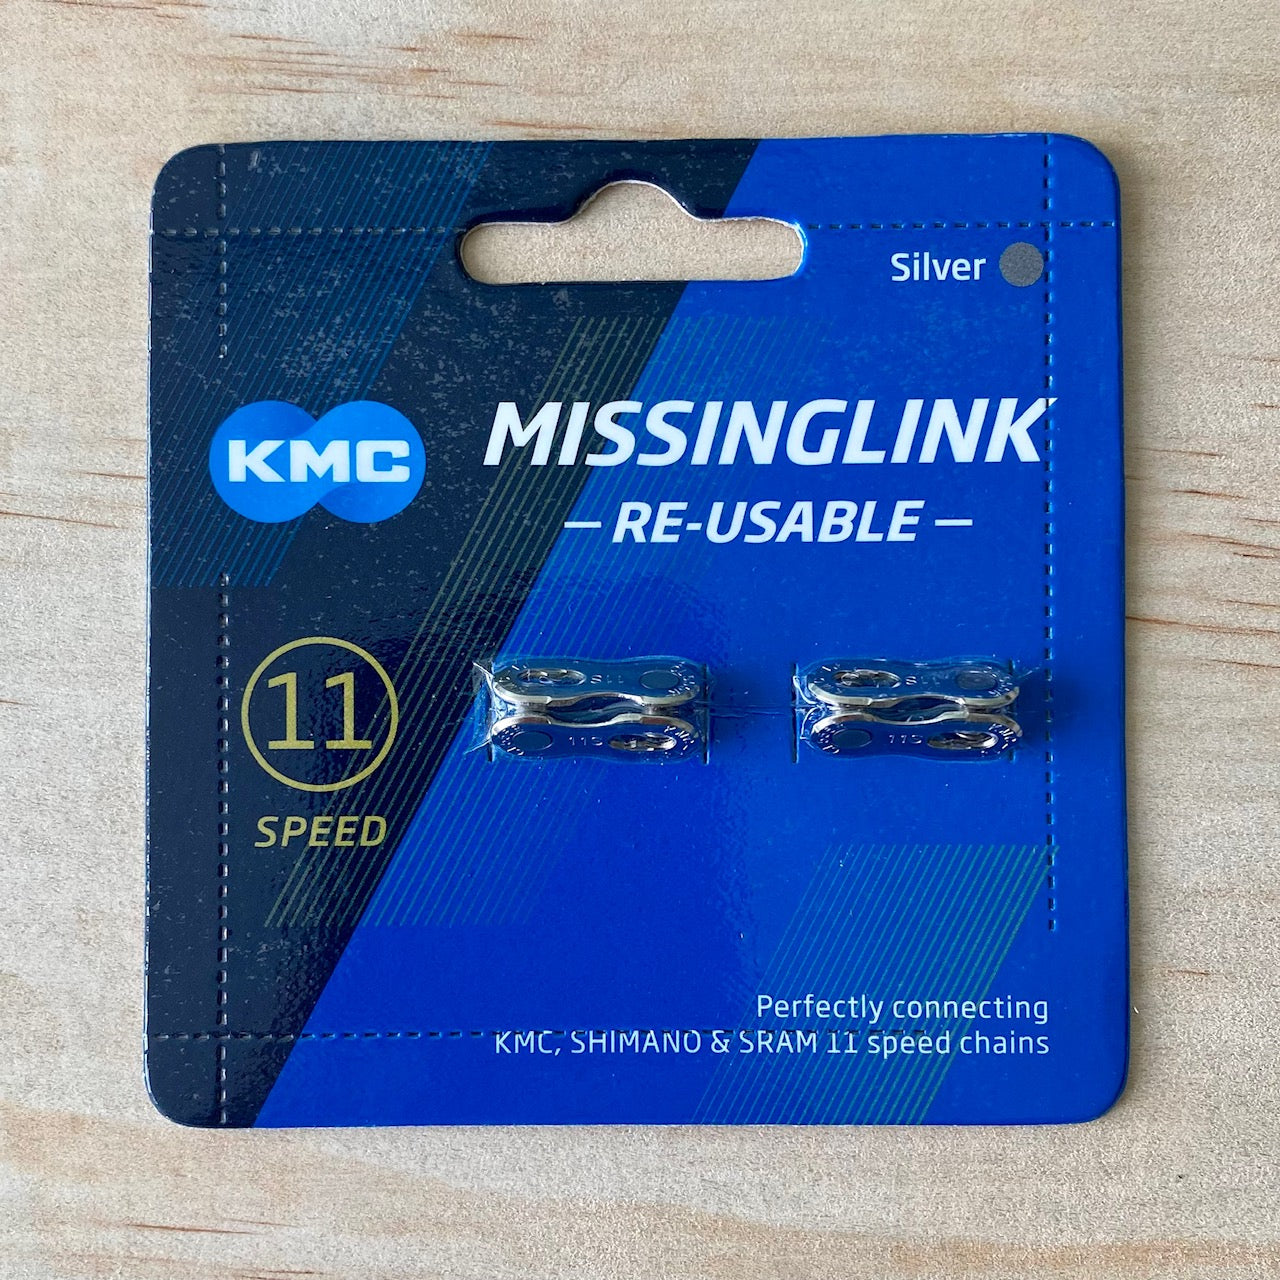 KMC 11 Speed Missing Link